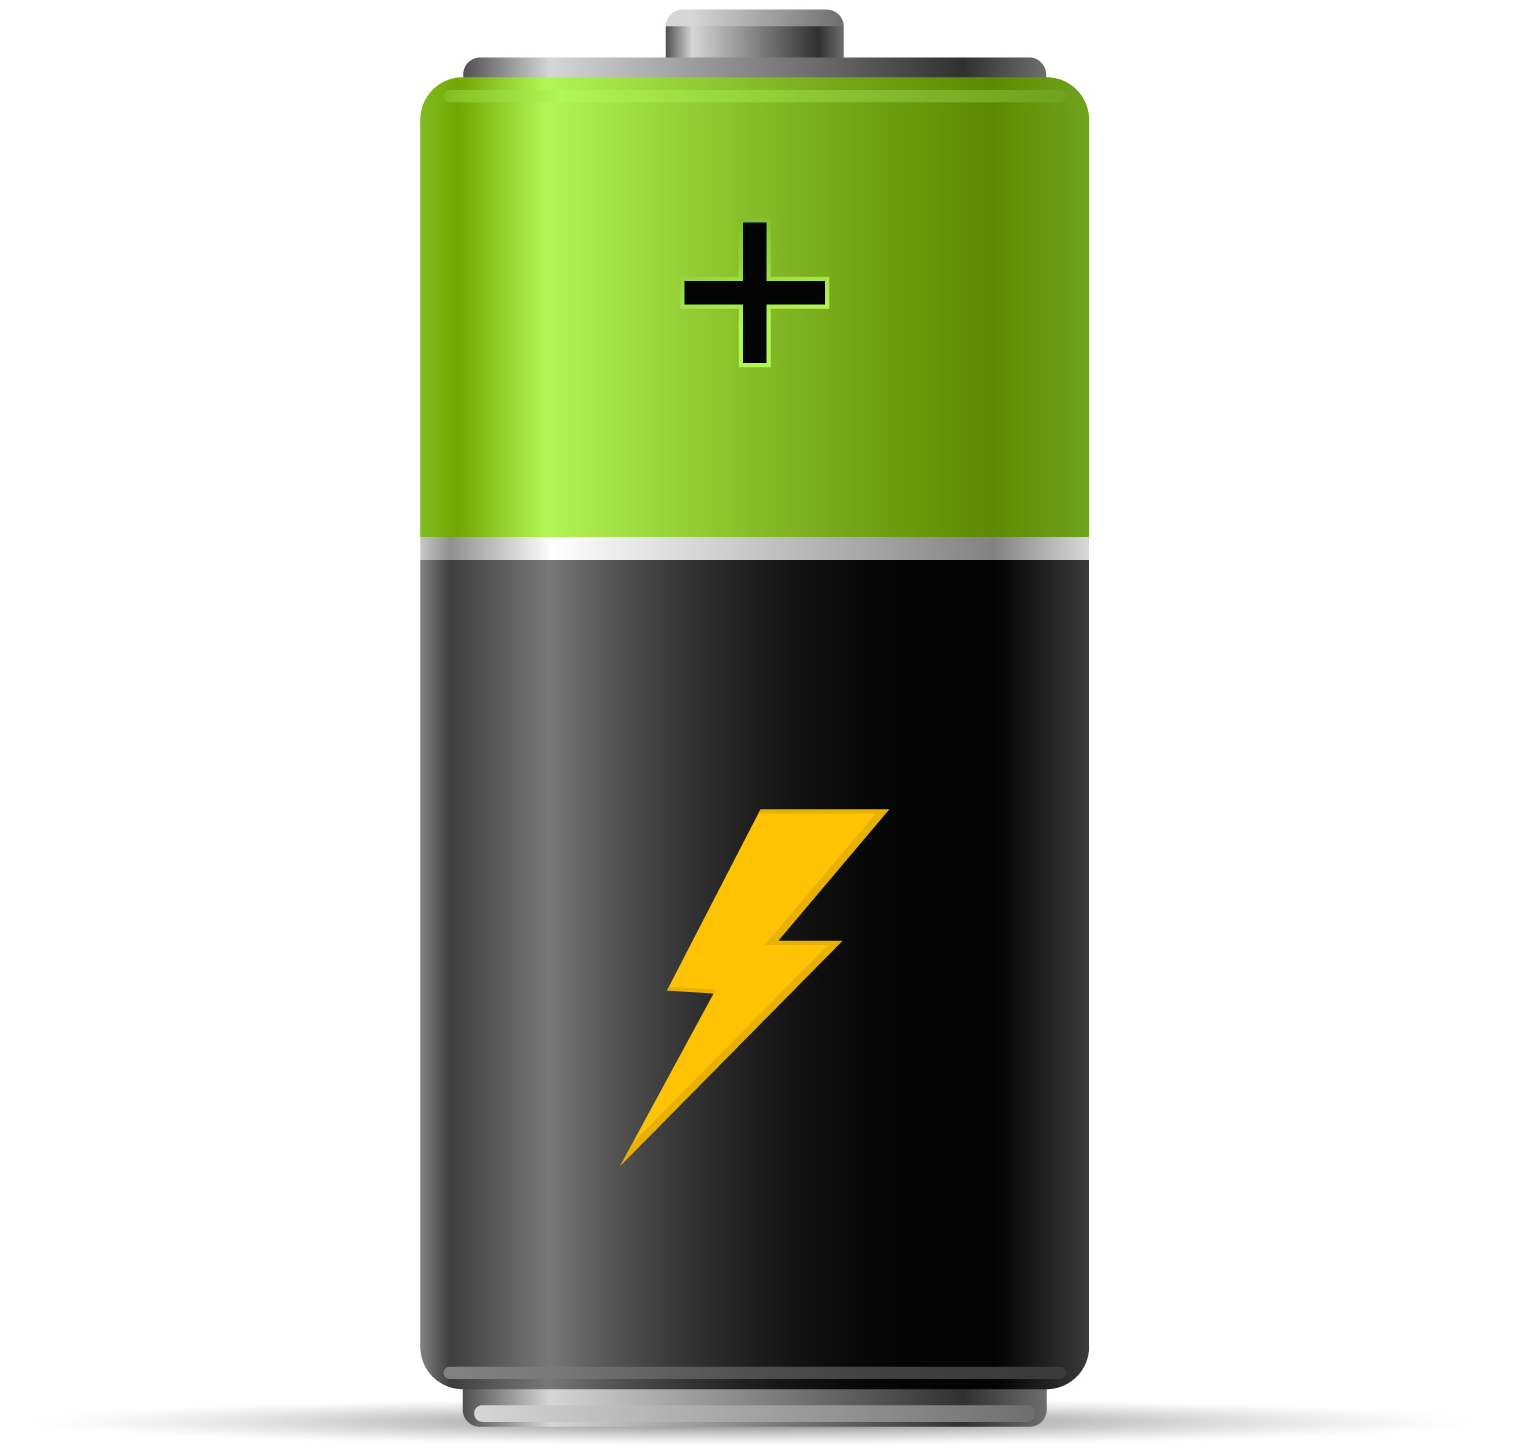 Iphone Battery icon. Значок аккумулятора. Значок батарейки. Батарейка без фона. Телефон зарядка молния